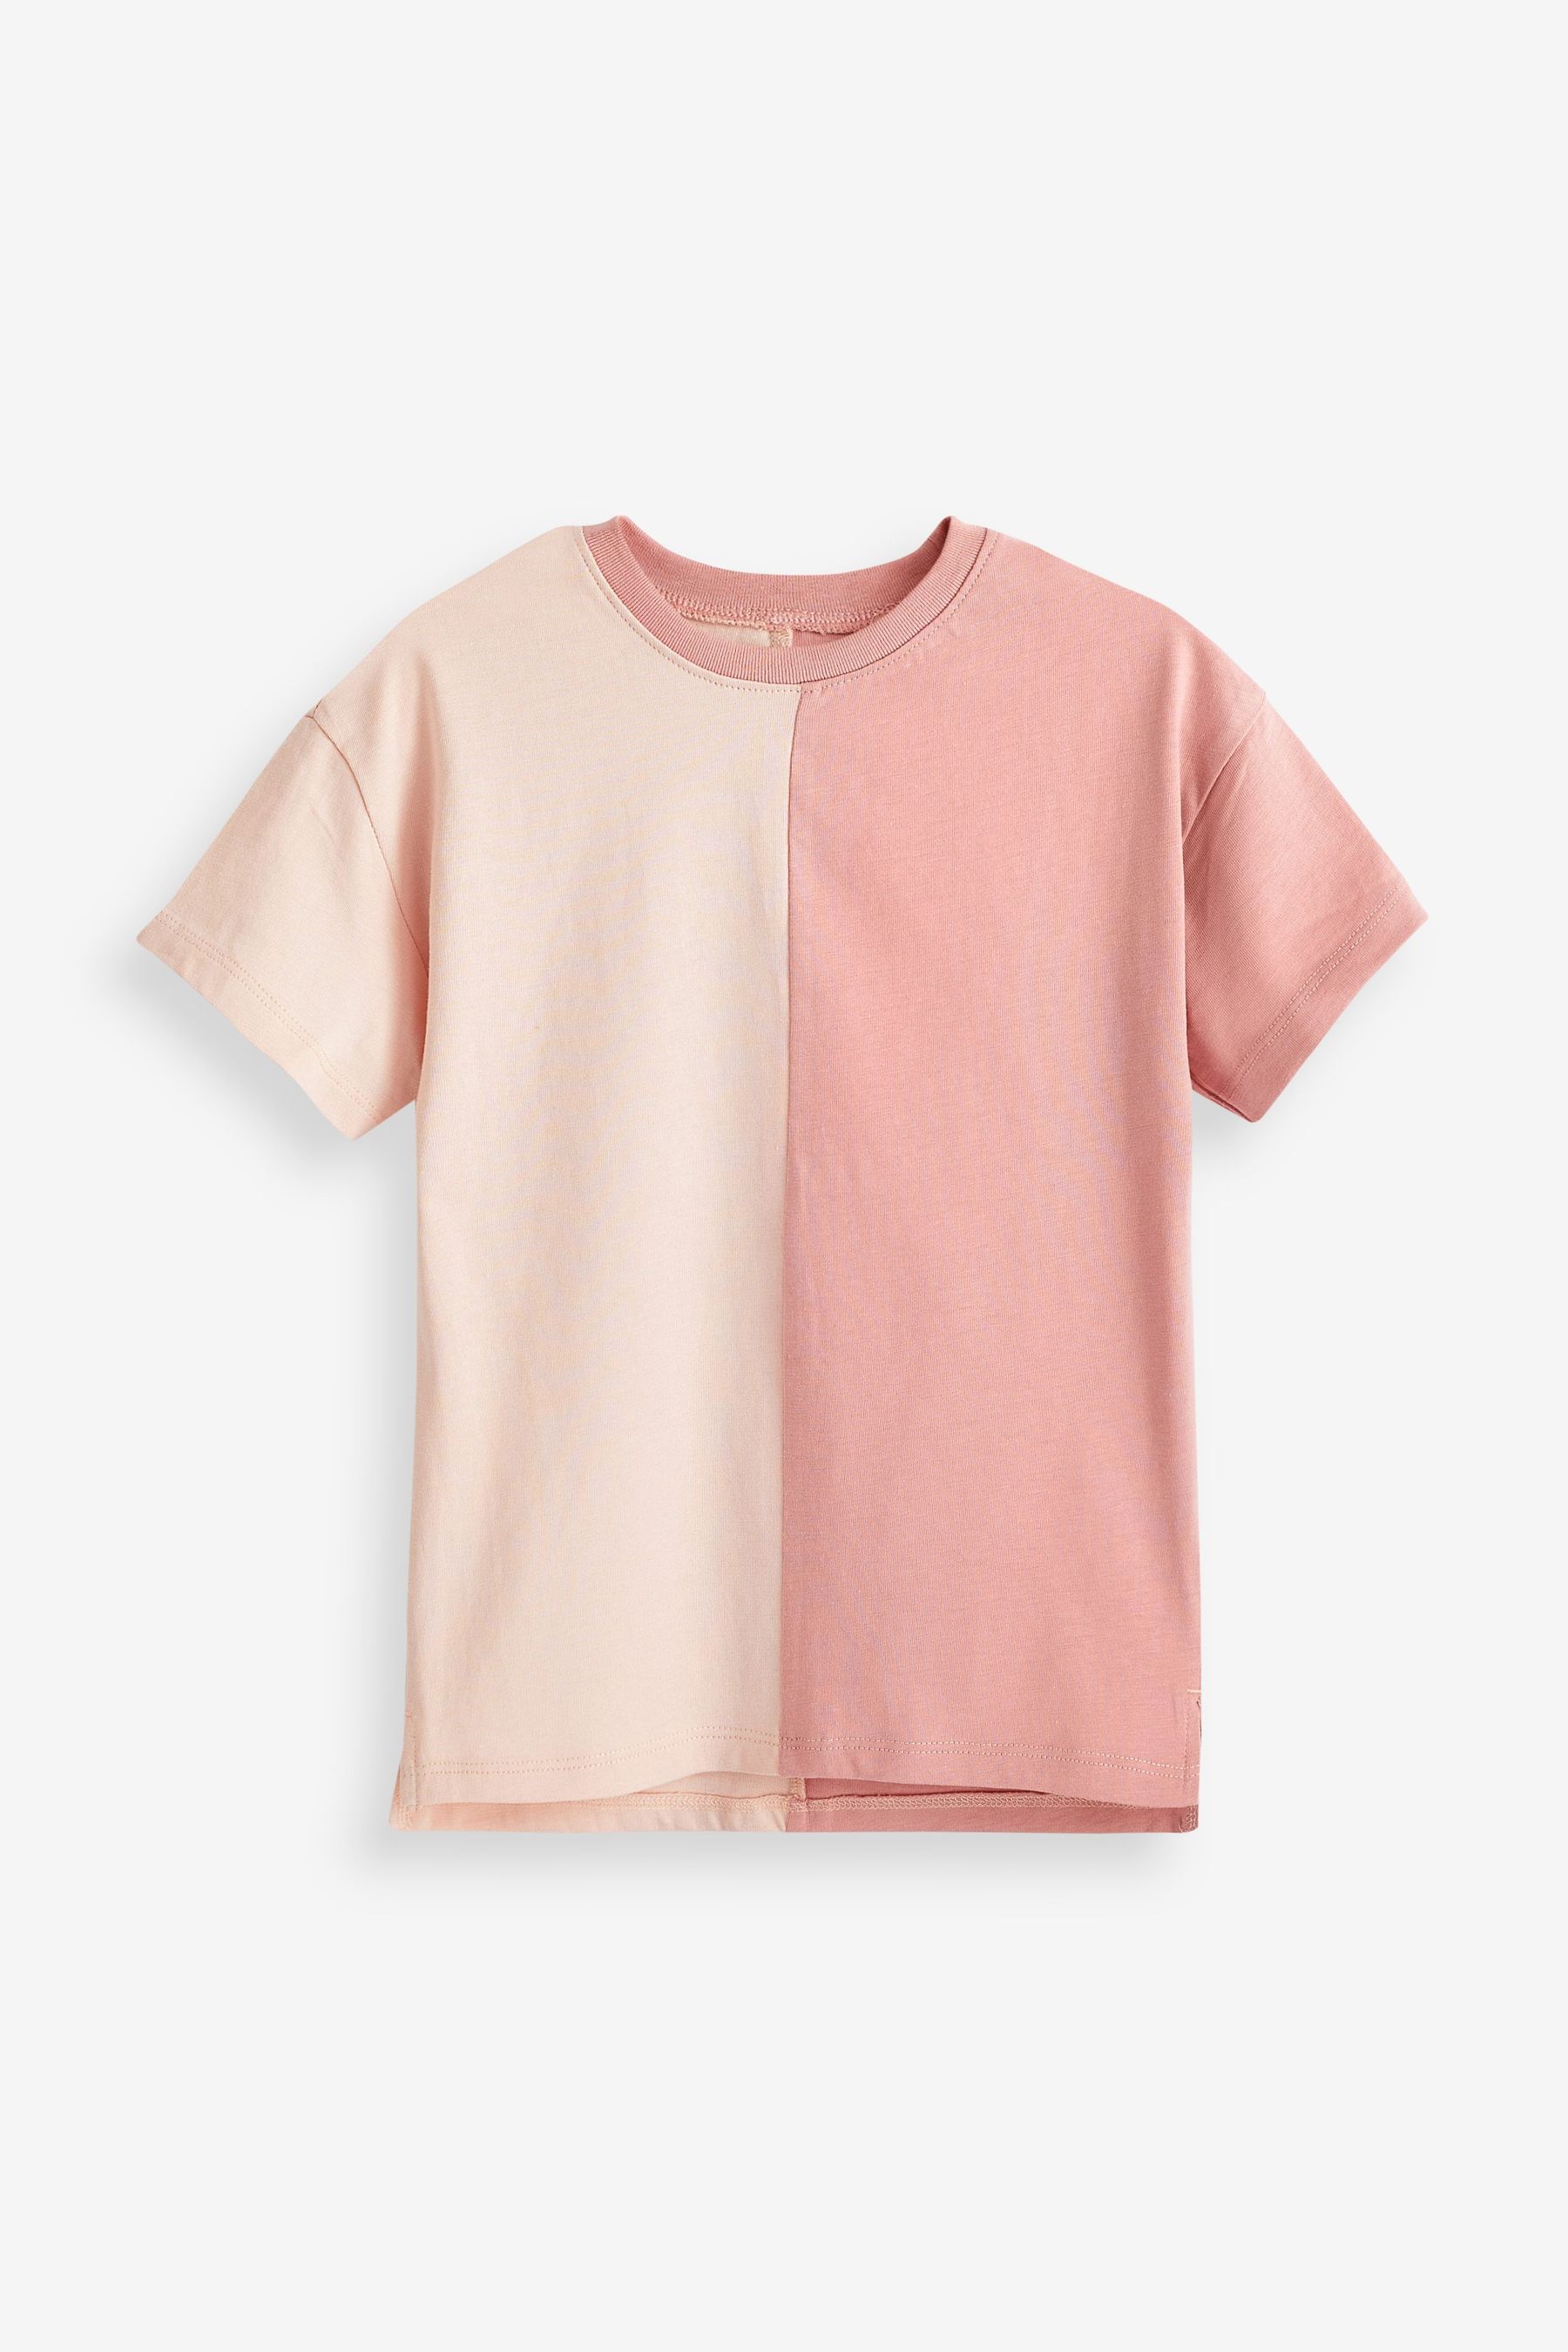 Хлопковая футболка оверсайз Next, розовый